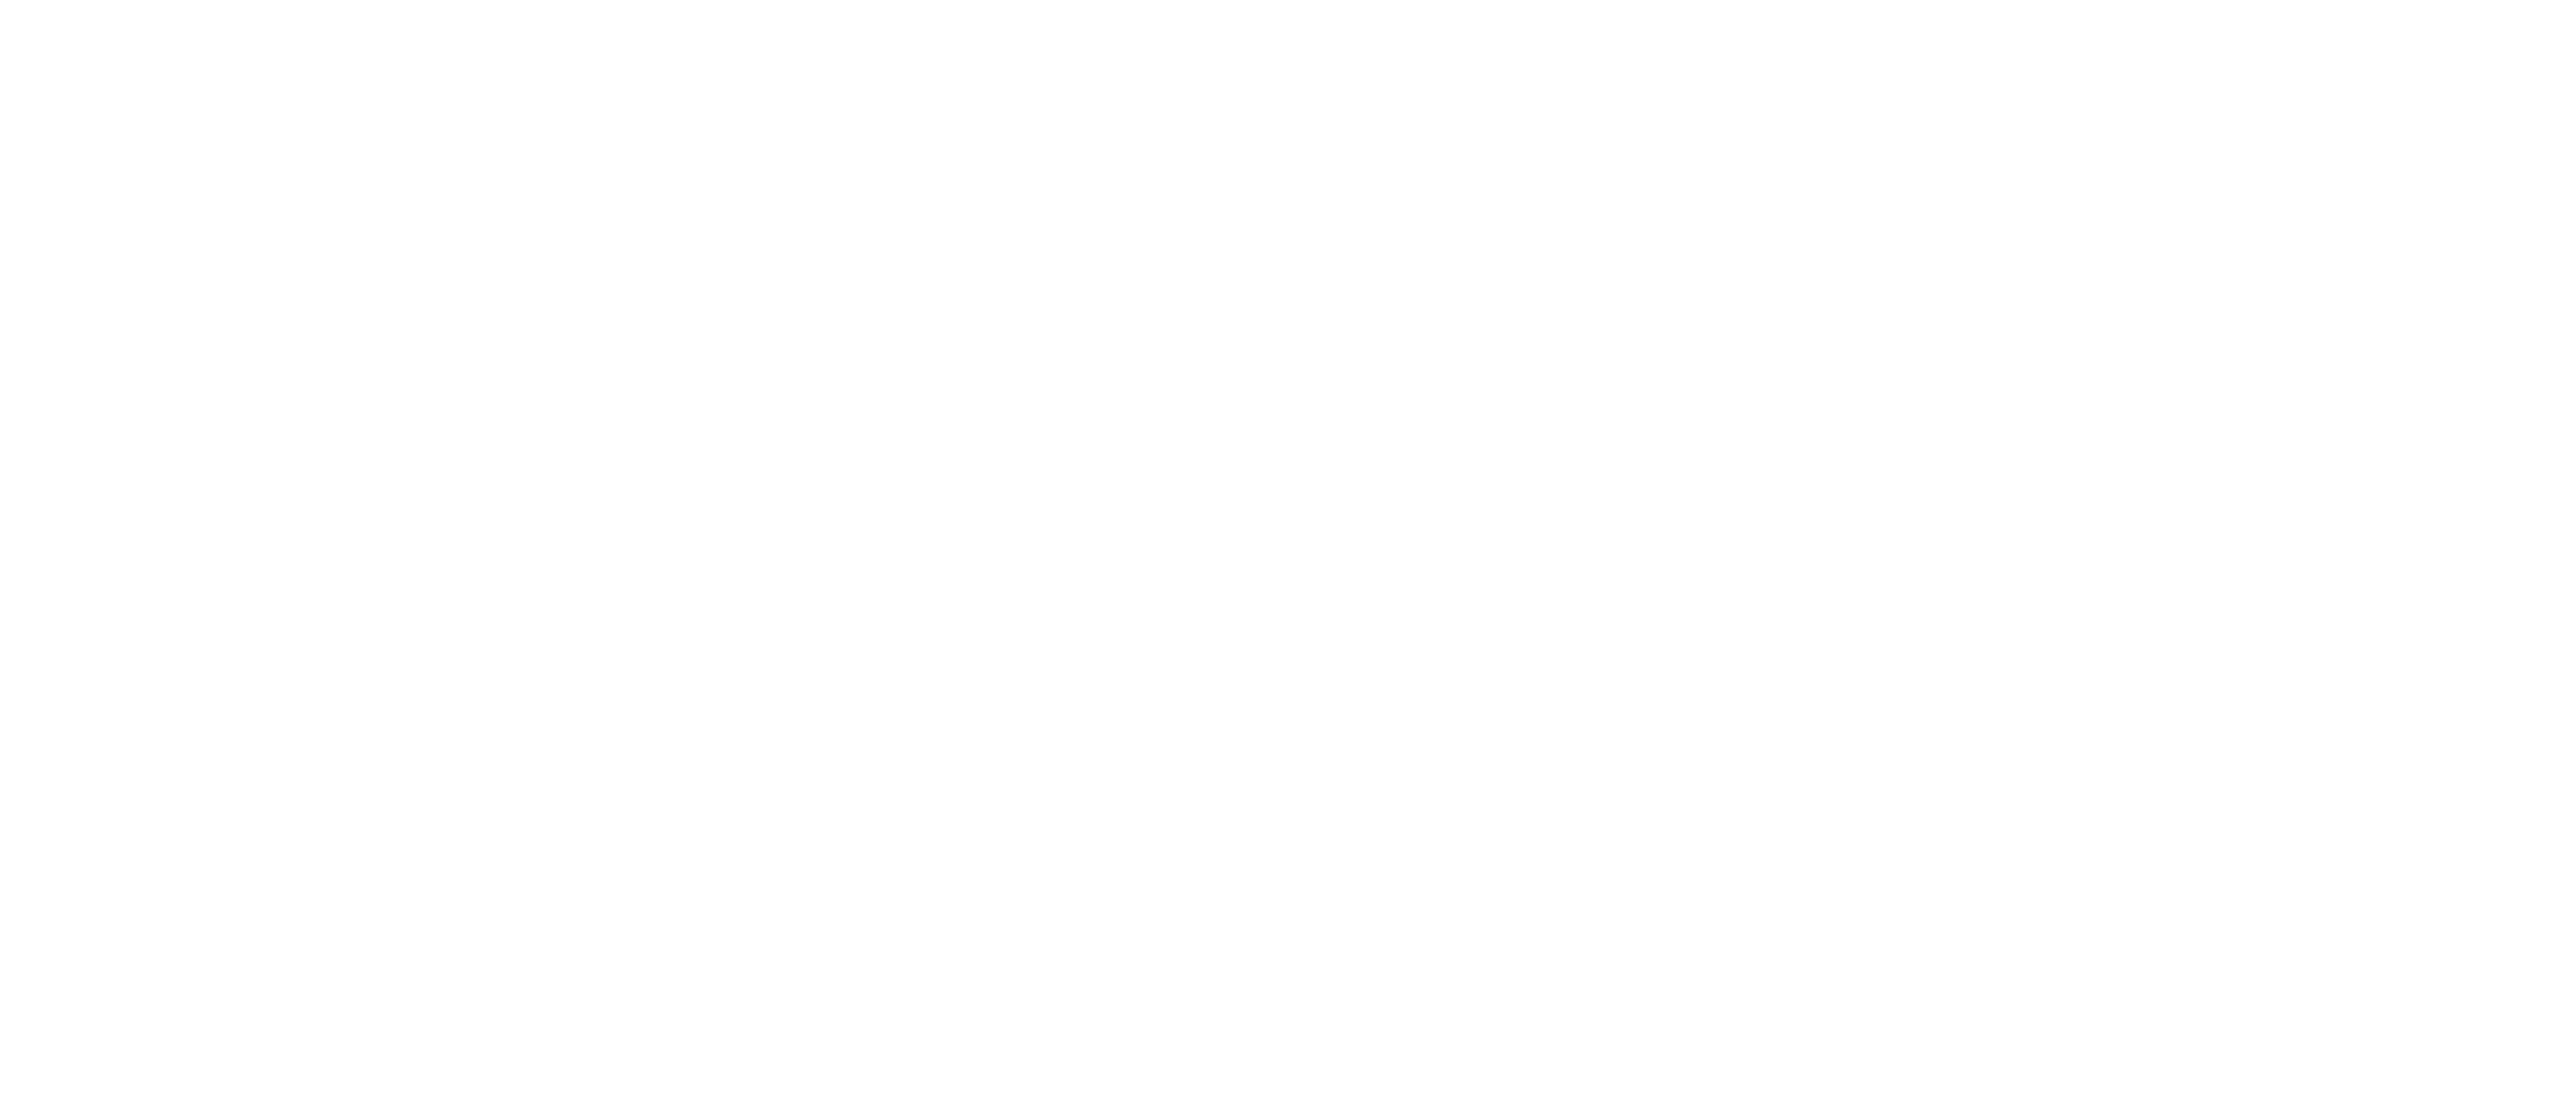 co2 offset service